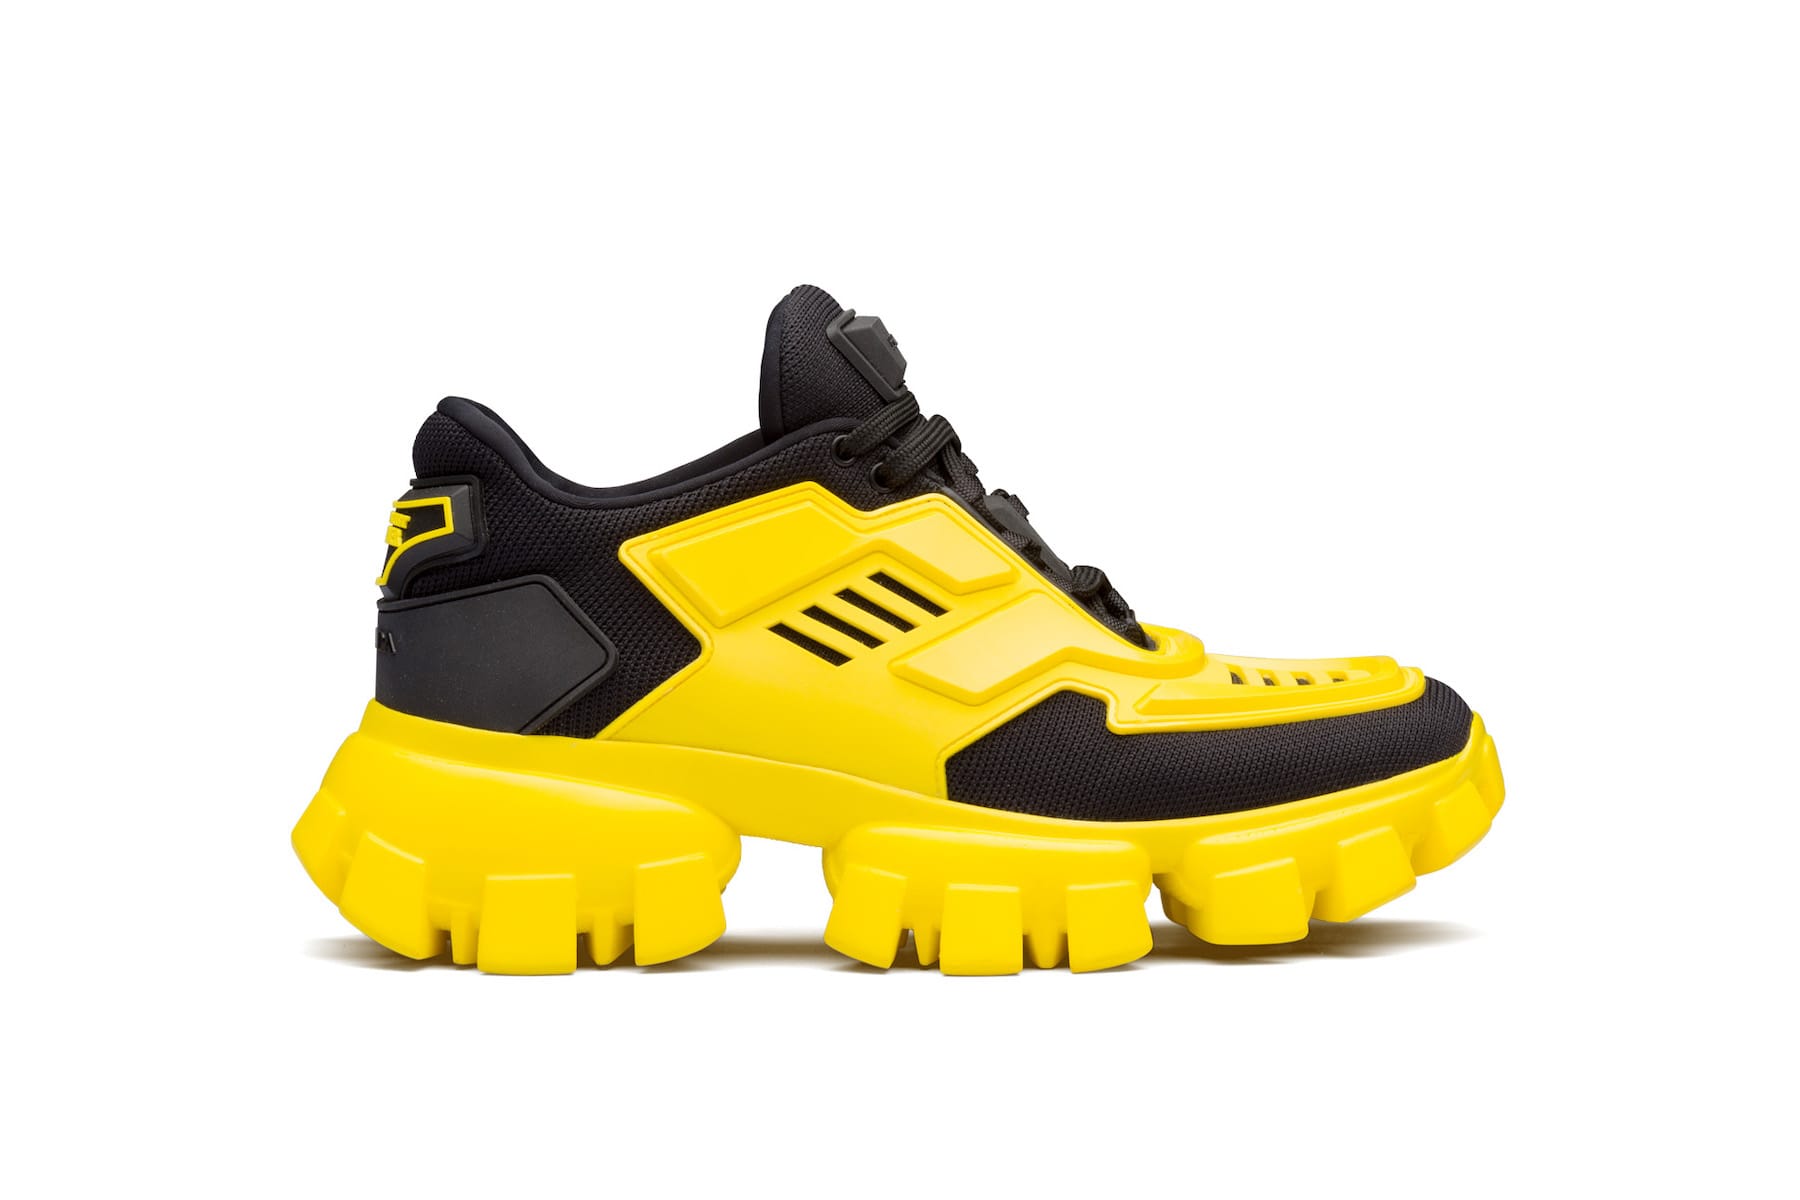 yellow prada shoes